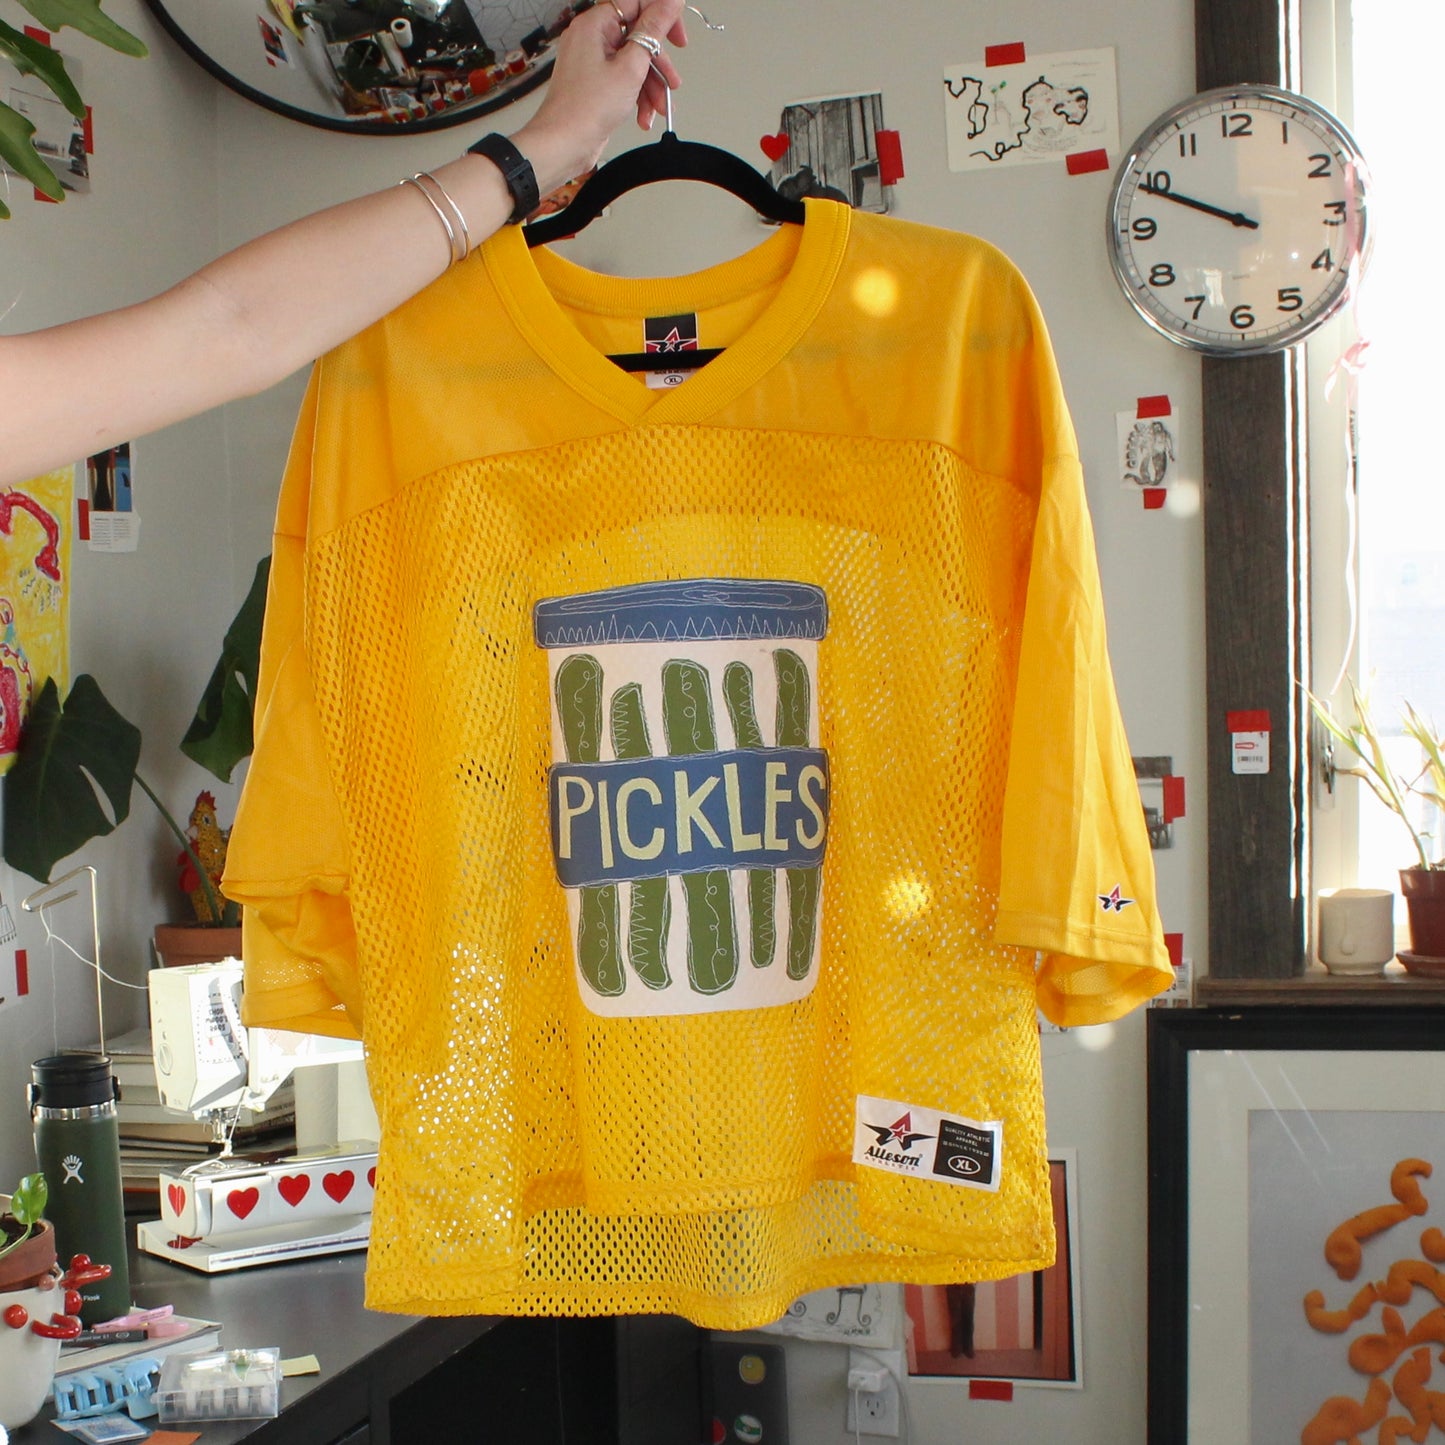 Pickles jersey(XL)